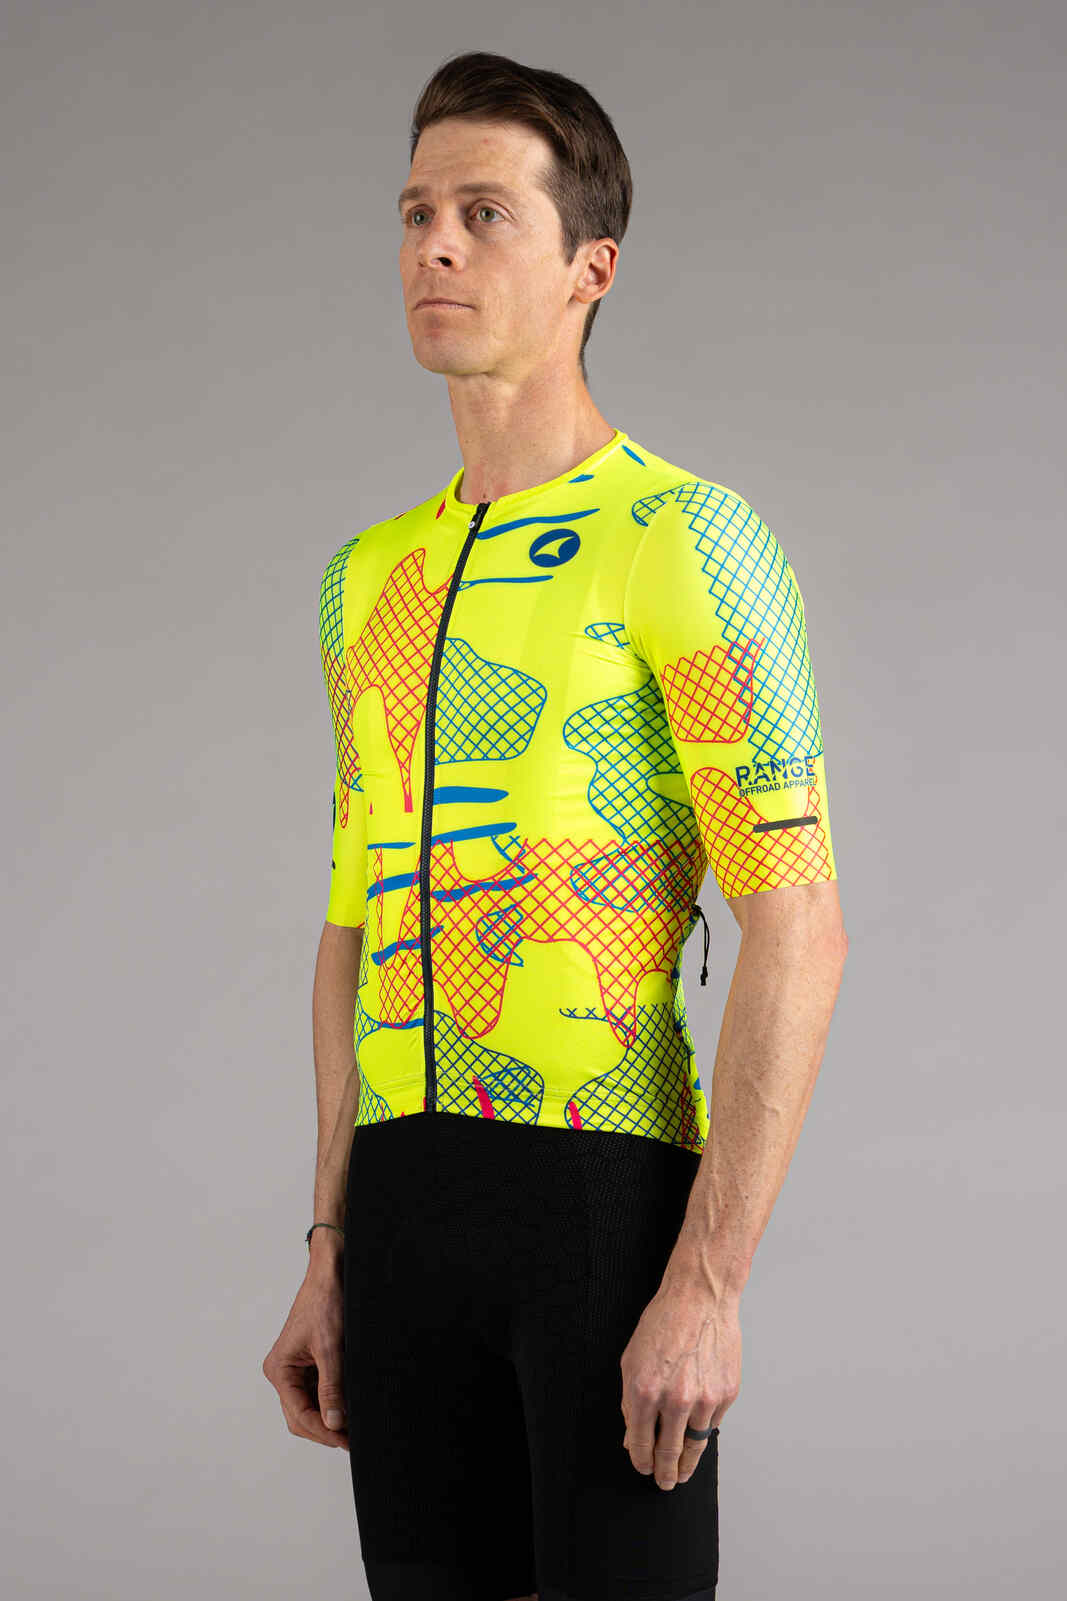 Men's High-Viz Yellow Gravel Cycling Jersey - Front View